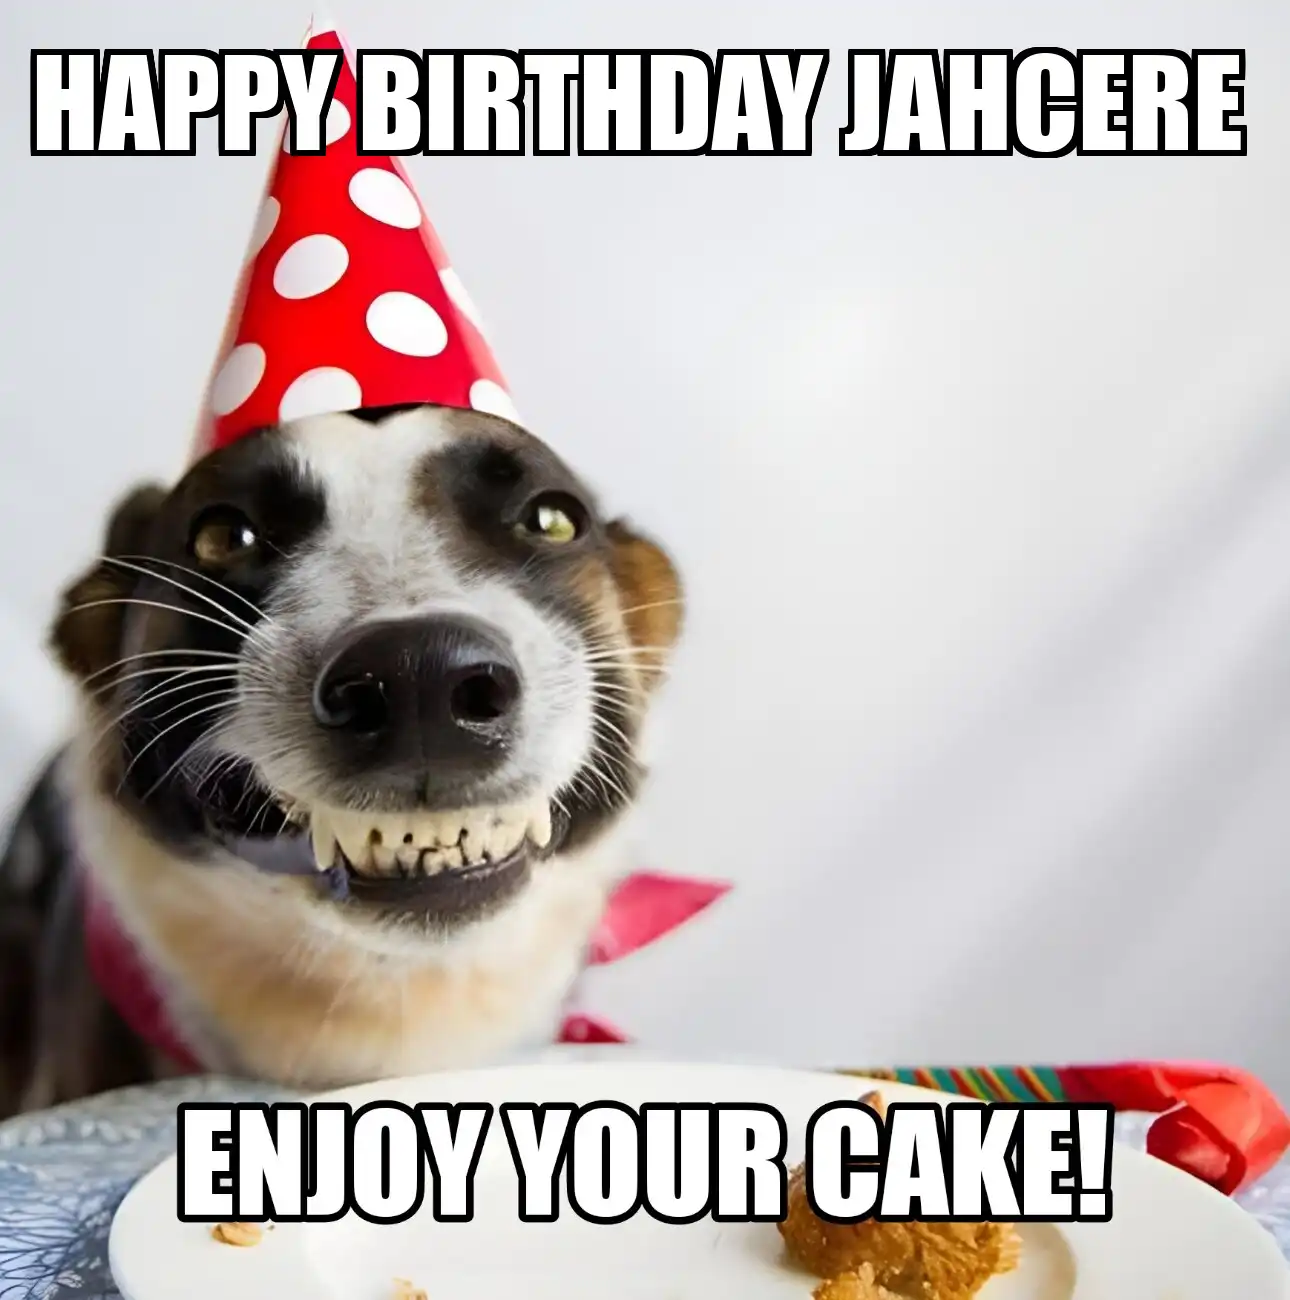 Happy Birthday Jahcere Enjoy Your Cake Dog Meme